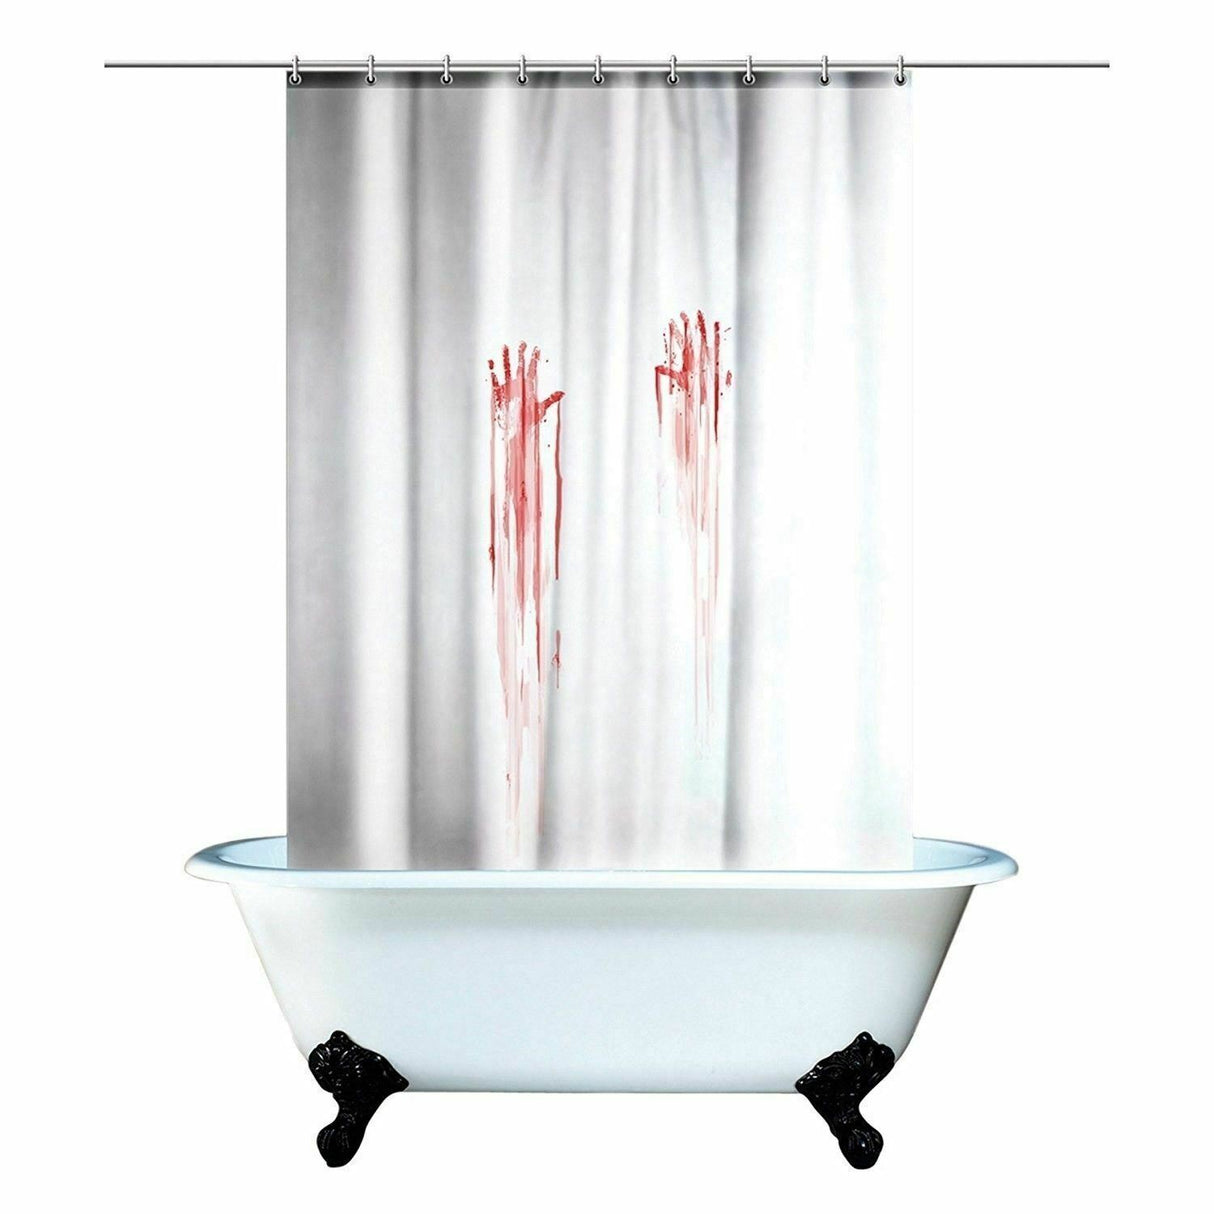 Gift Republic Blood Bath Shower Curtain